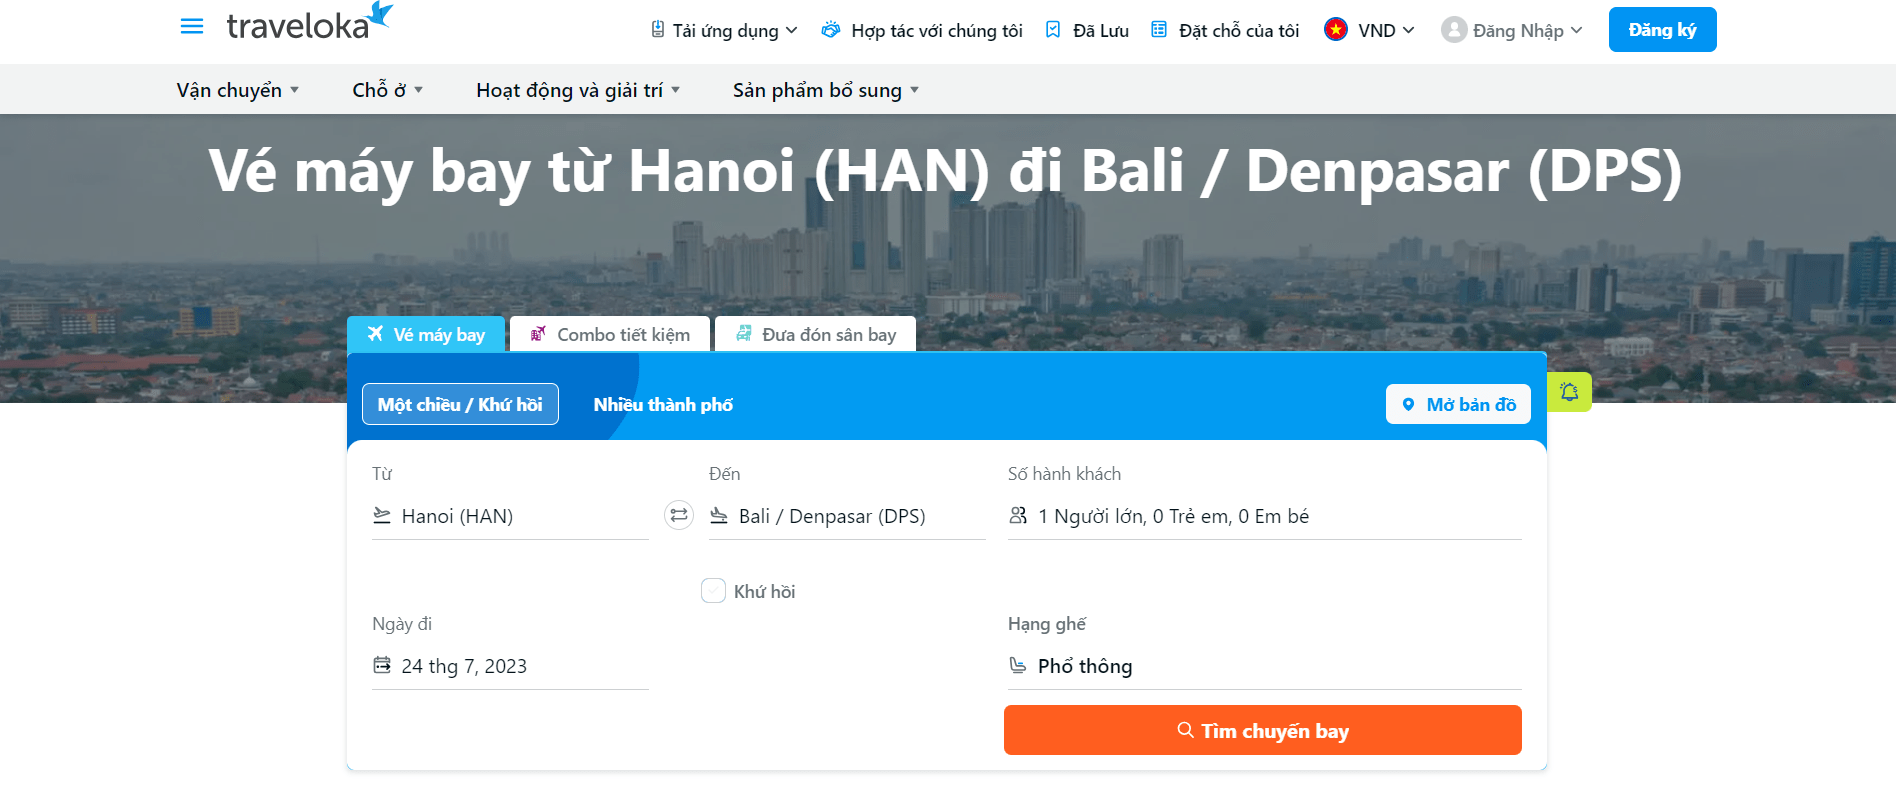 Mua vé máy bay đi Bali